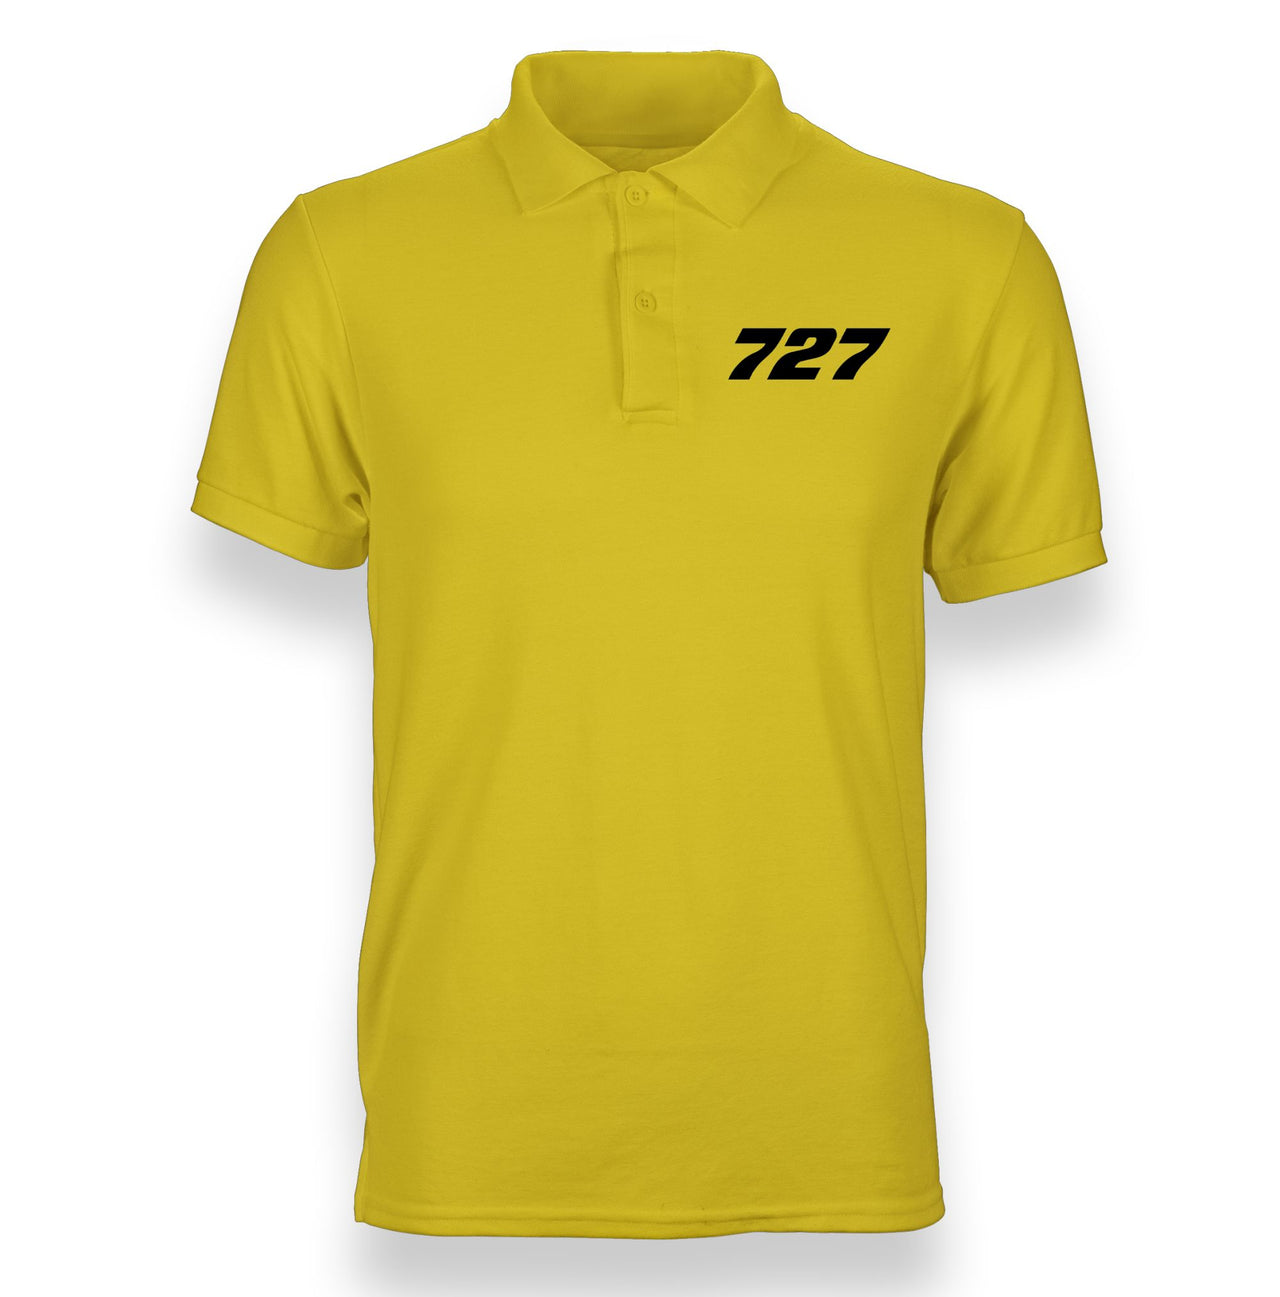 727 Flat Text Designed "WOMEN" Polo T-Shirts